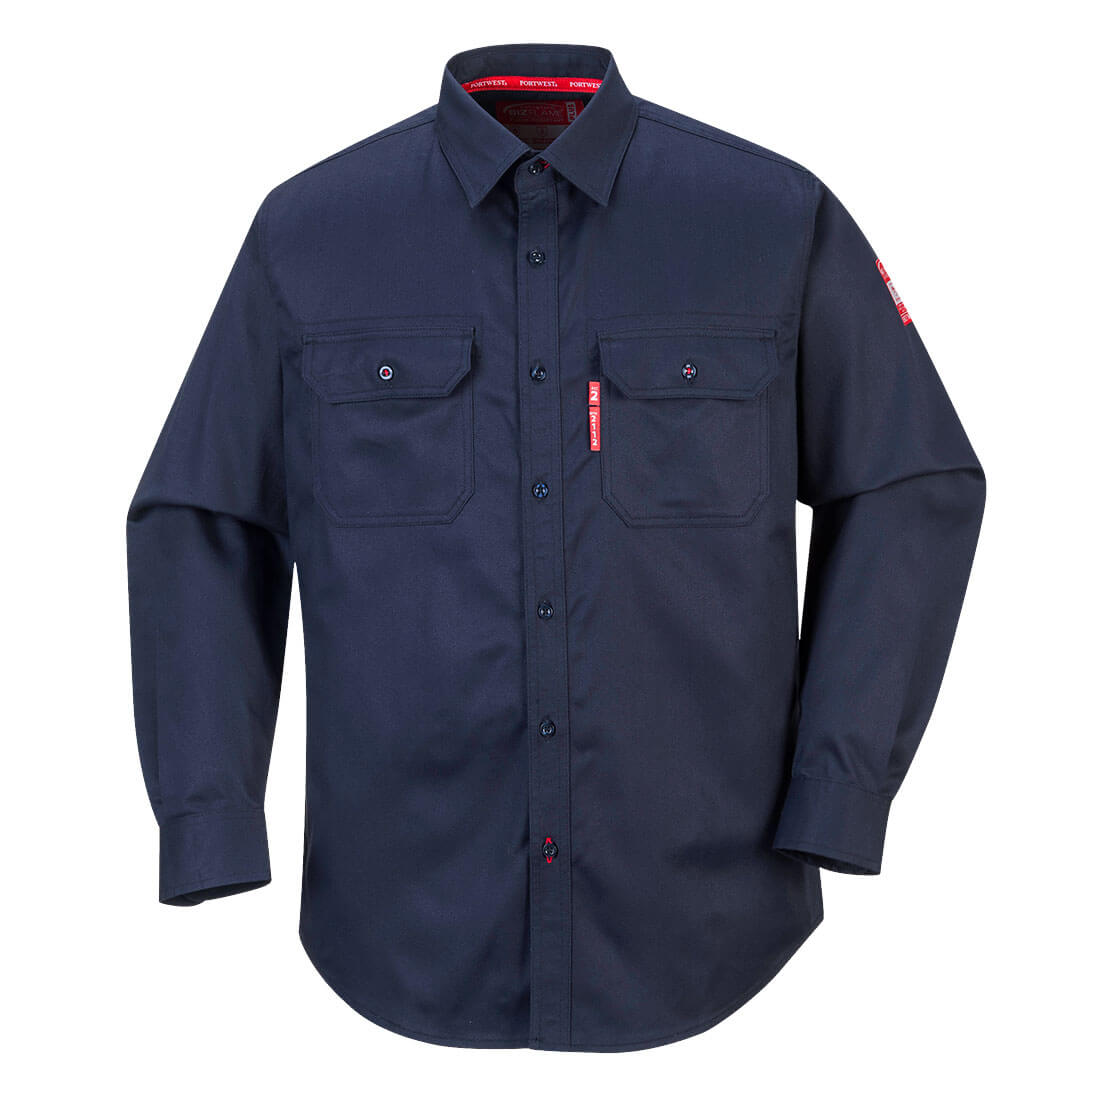 FR89 Portwest® Bizflame® 88/12 FR/AR Button Down Shirts - Navy